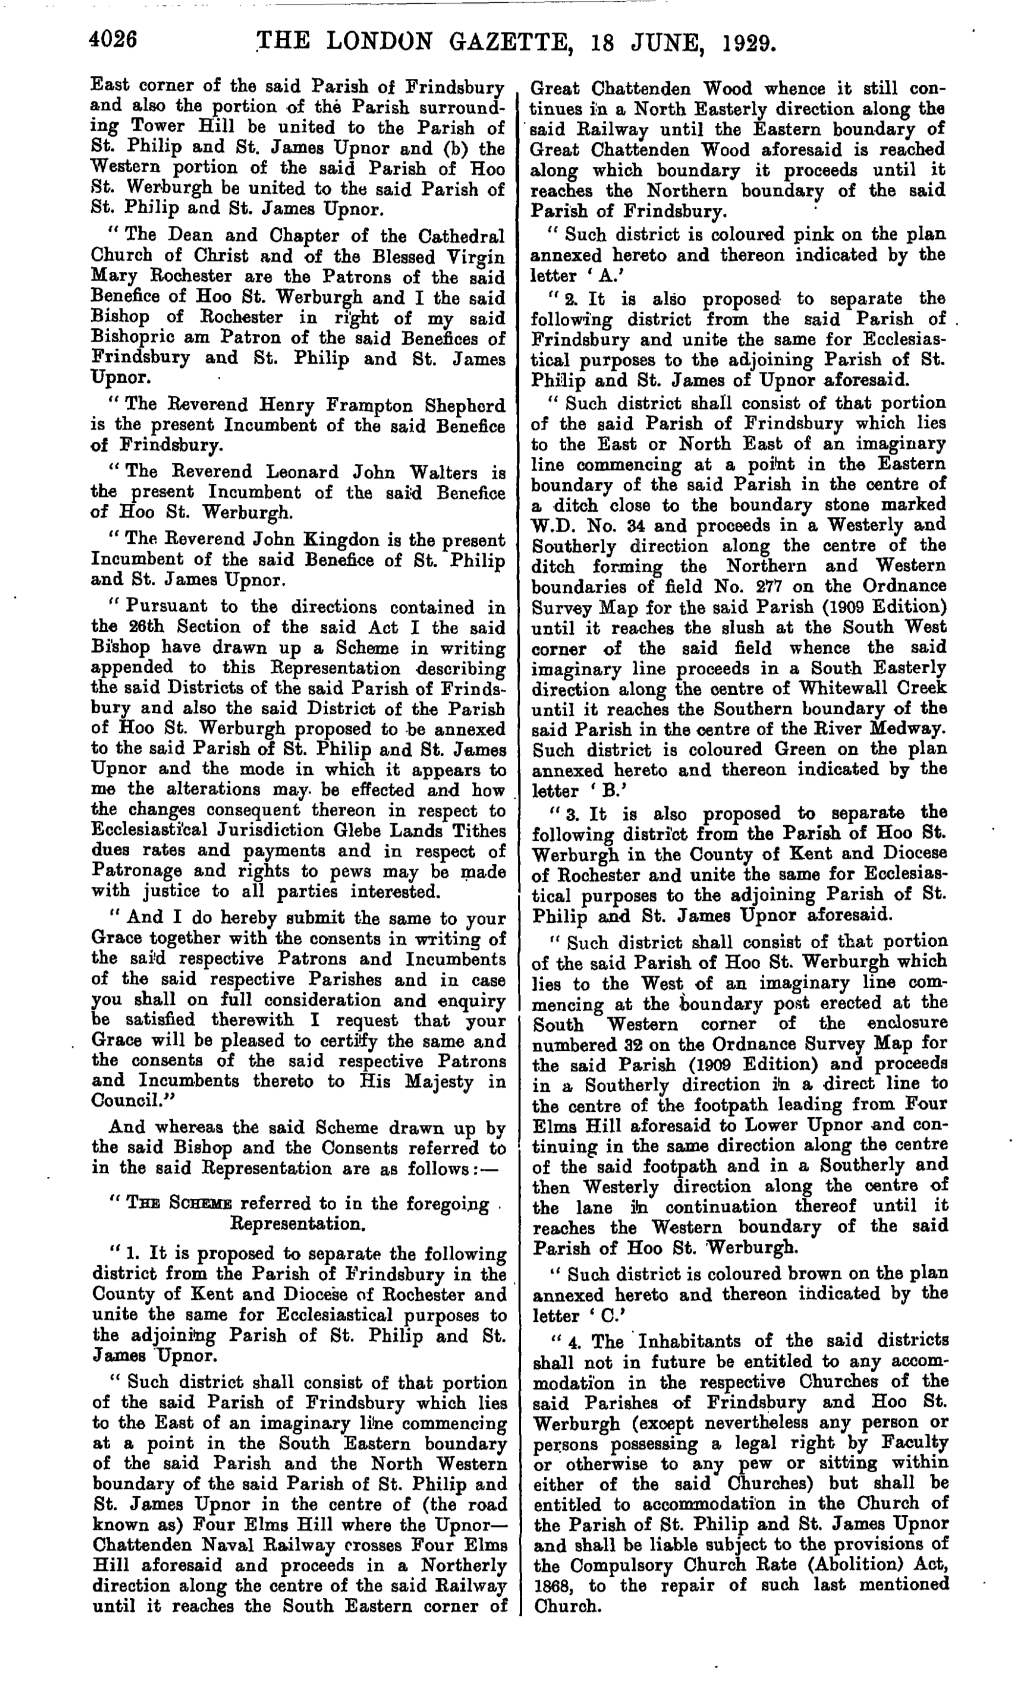 The London Gazette, 18 June, 1929